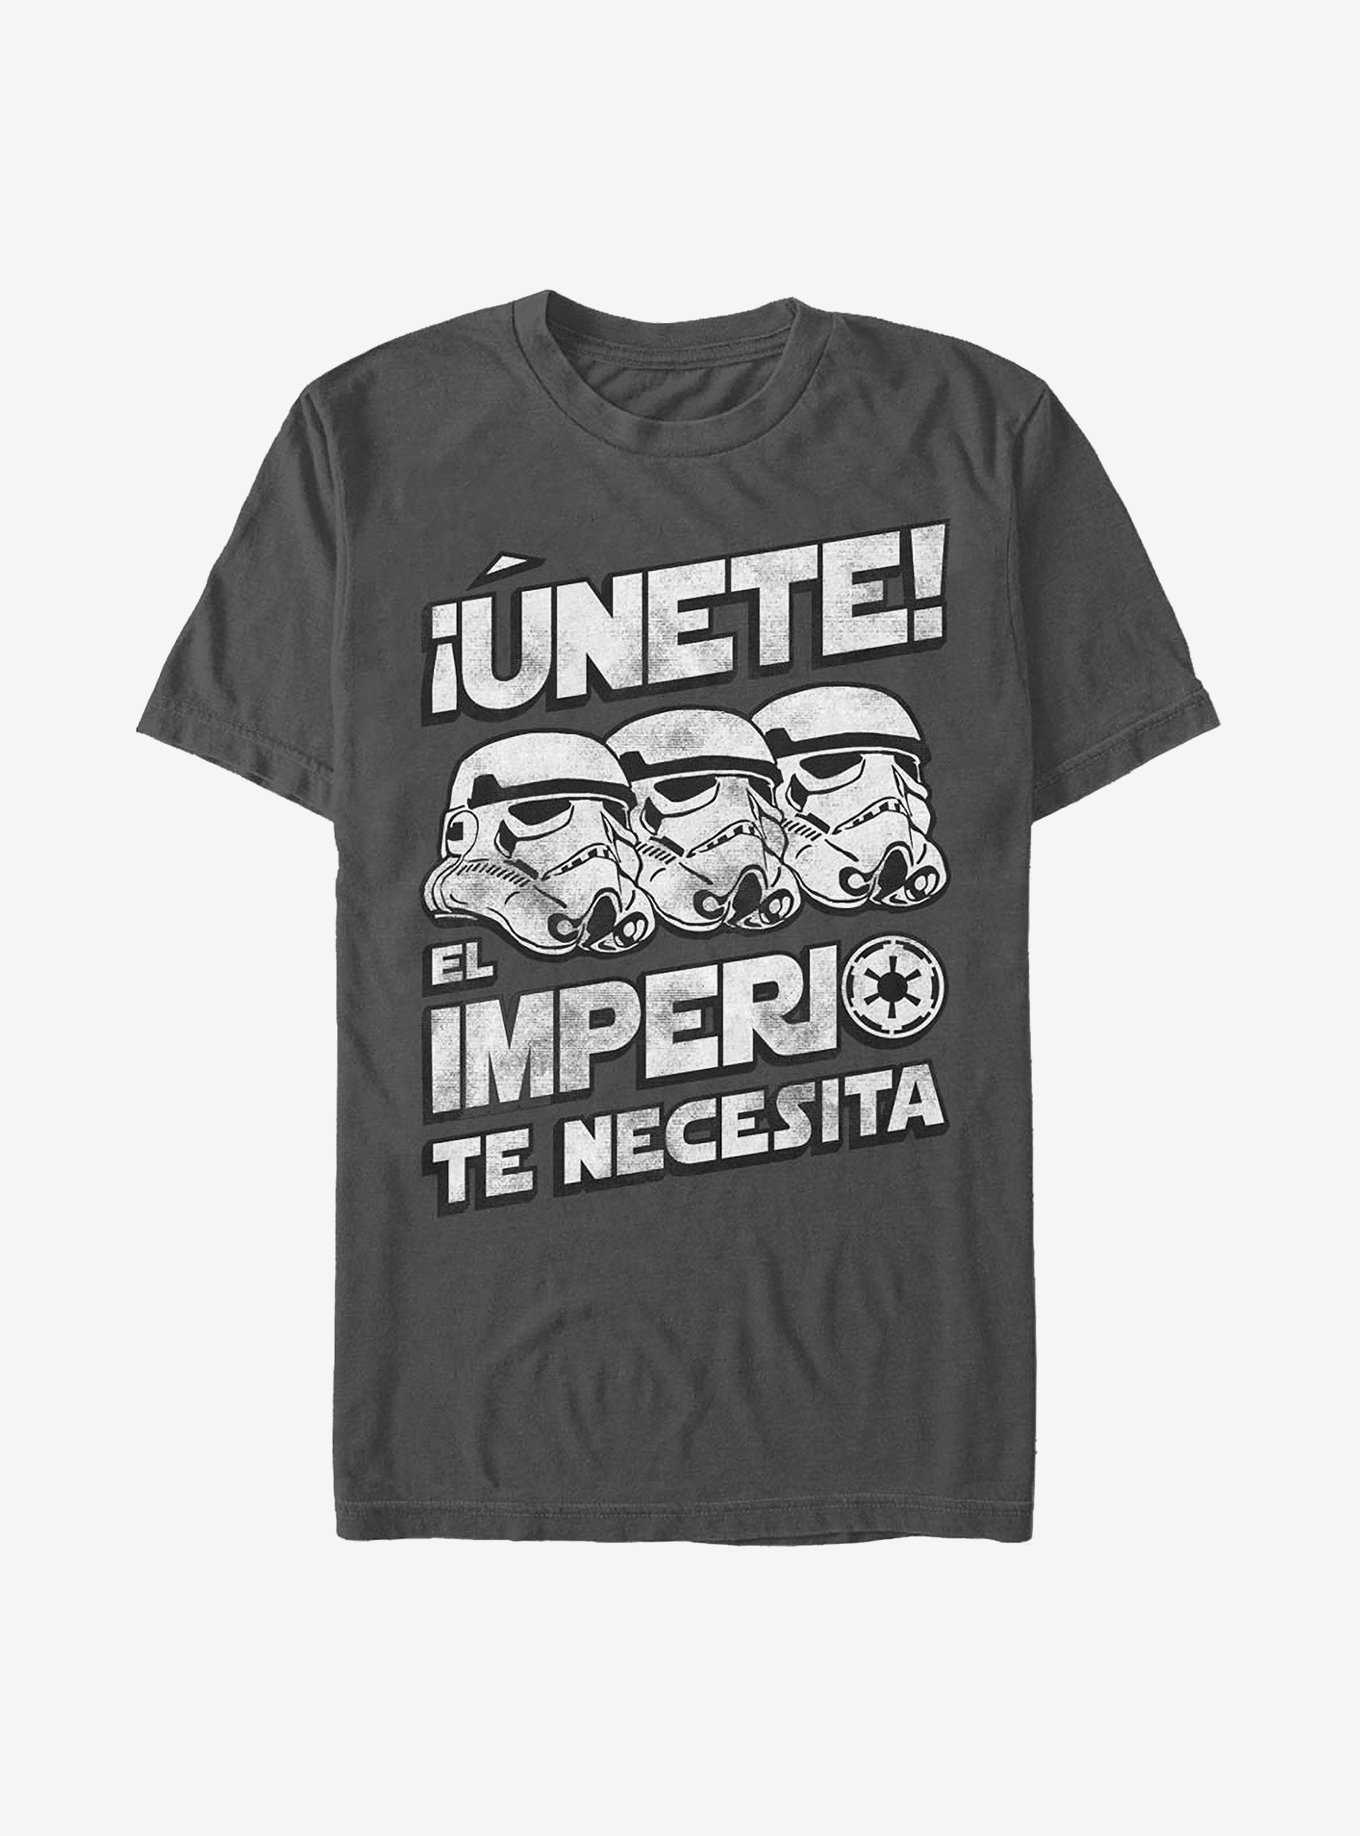 Star Wars Unete T-Shirt, , hi-res